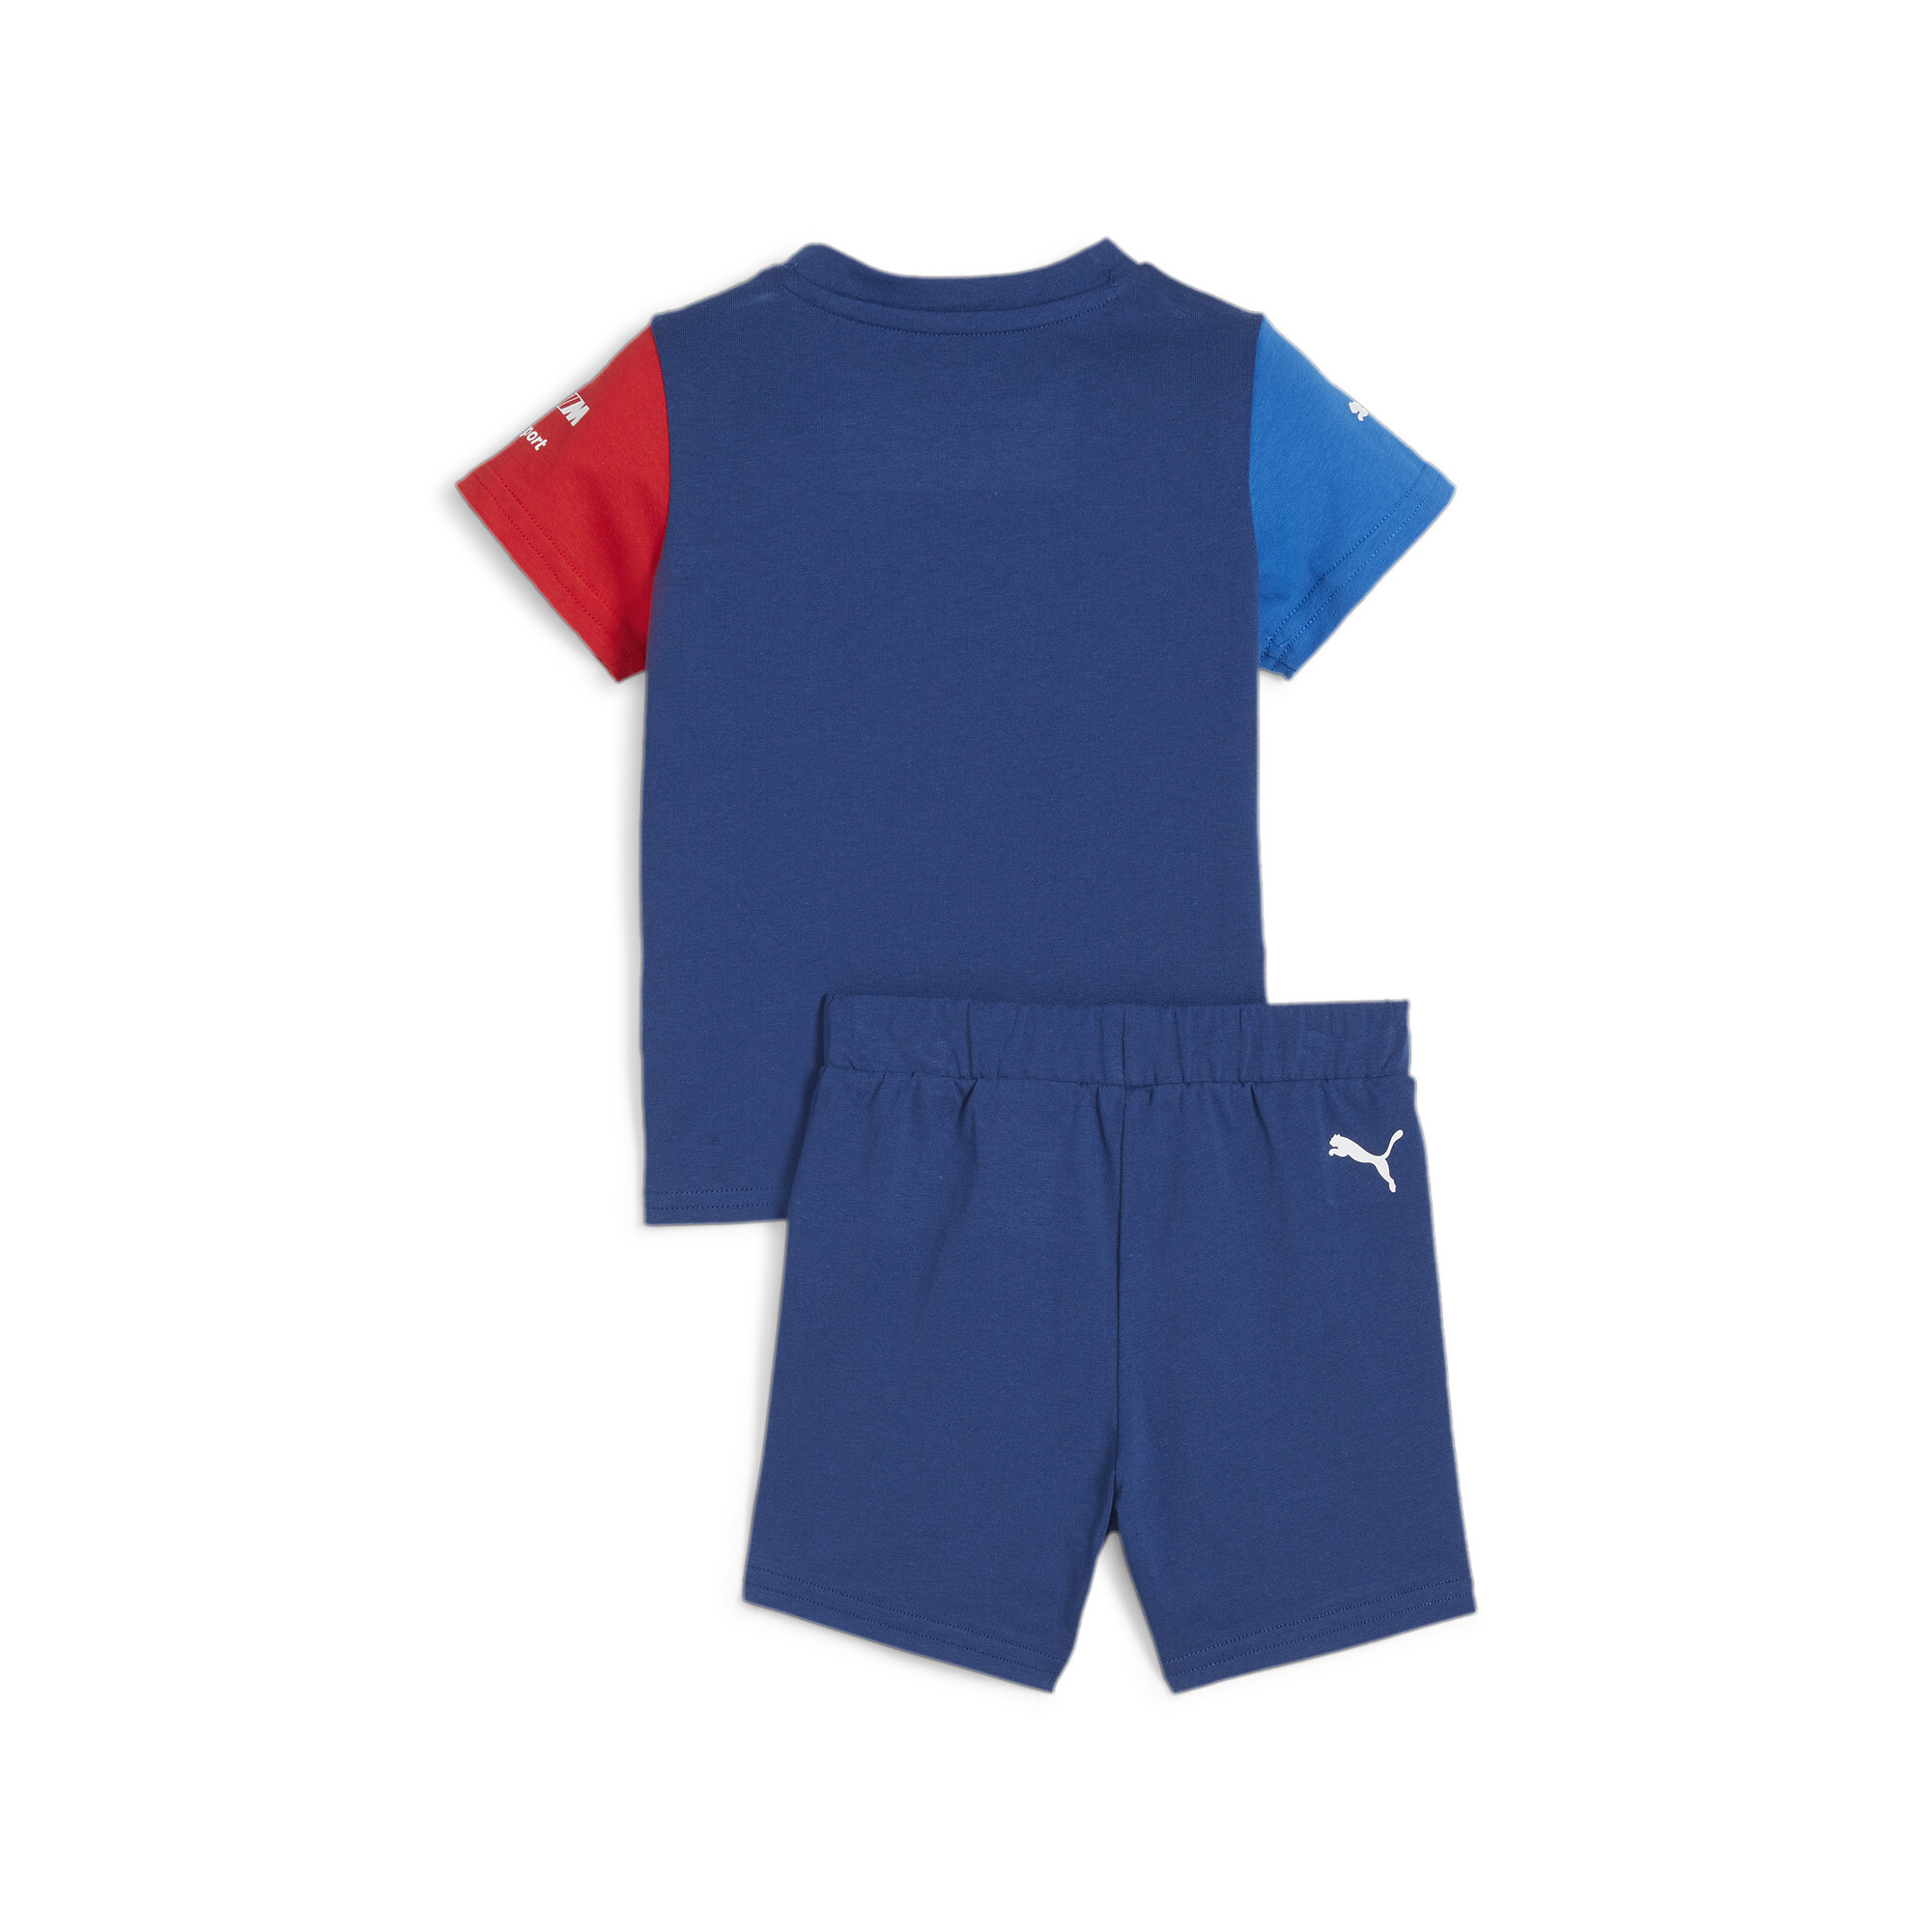 Puma BMW M Motorsport Toddlers' Set, Blue, Size 1-2M, Clothing